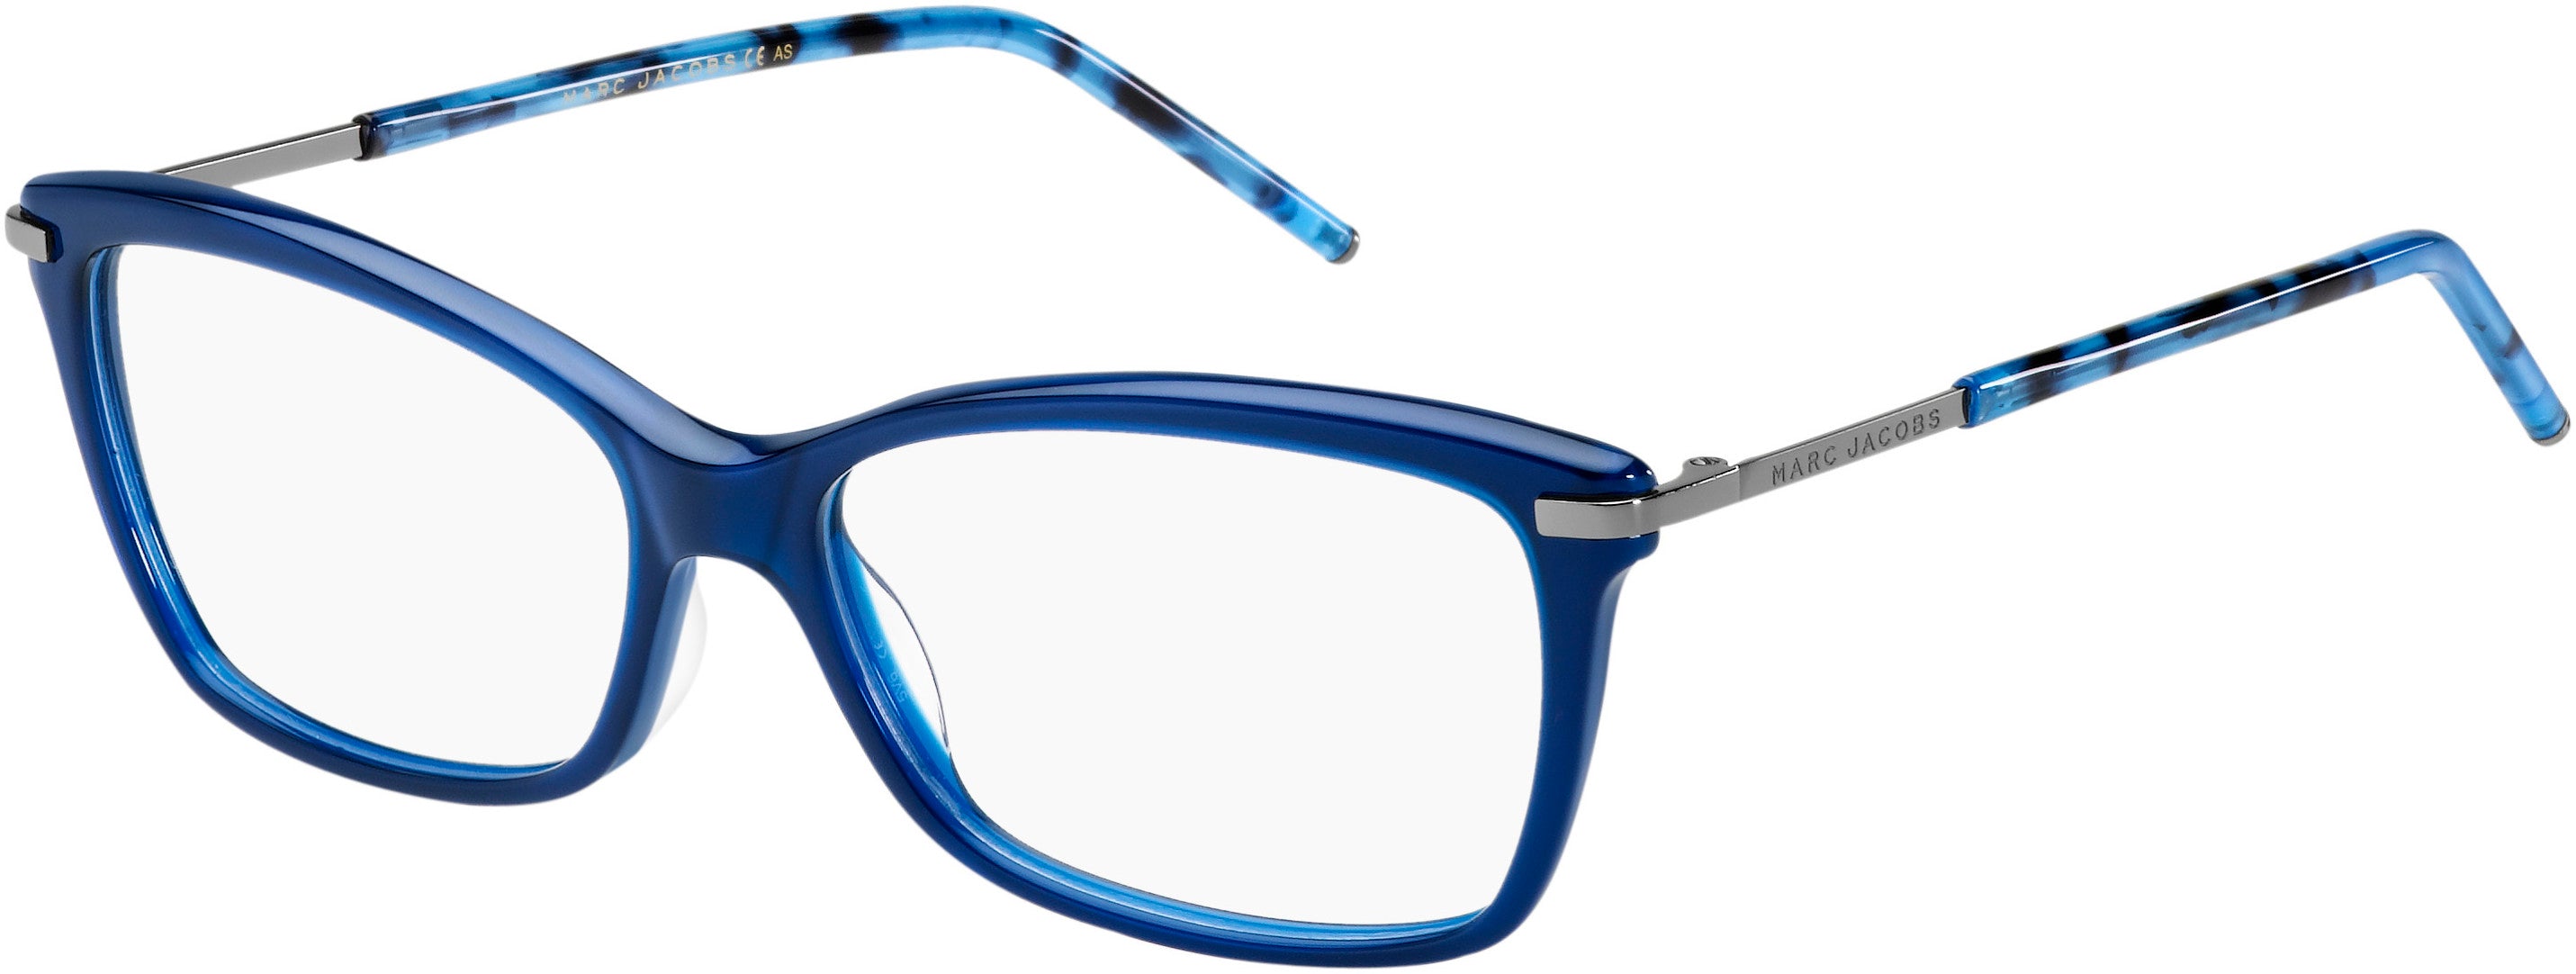 Marc Jacobs Marc 63 Rectangular Eyeglasses 0U5H-0U5H  Blue Opal (00 Demo Lens)